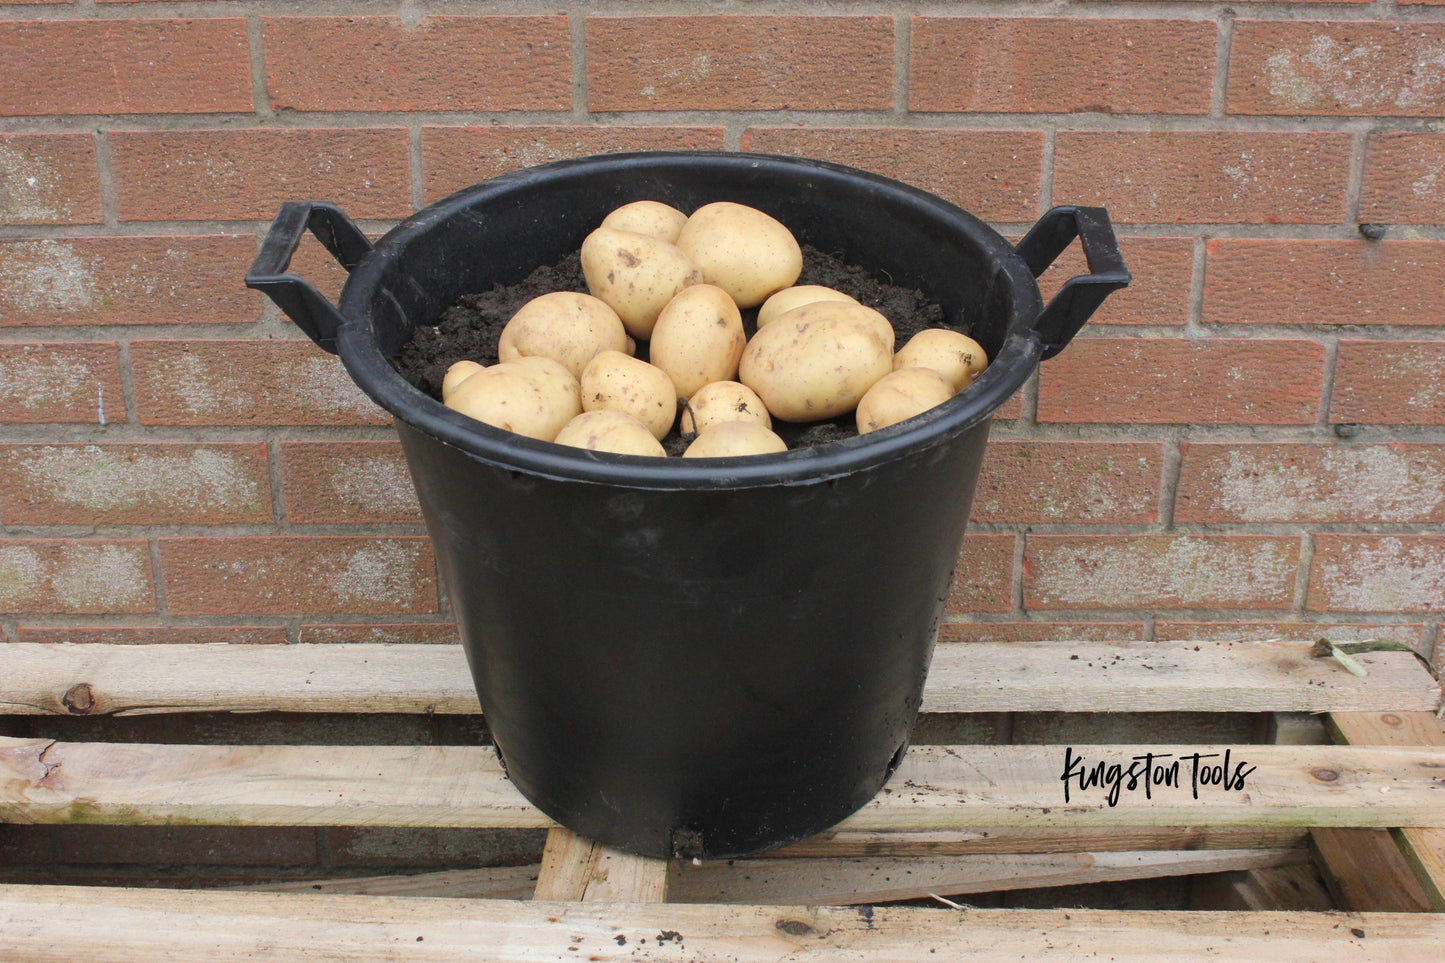 5x Heavy Duty 30L Plant Pots - Large Size 40cm / 15.7" - Plastic Planters for Outdoor Plants, Vegetables & Flowers – Potato Grow Tub Container with Handles